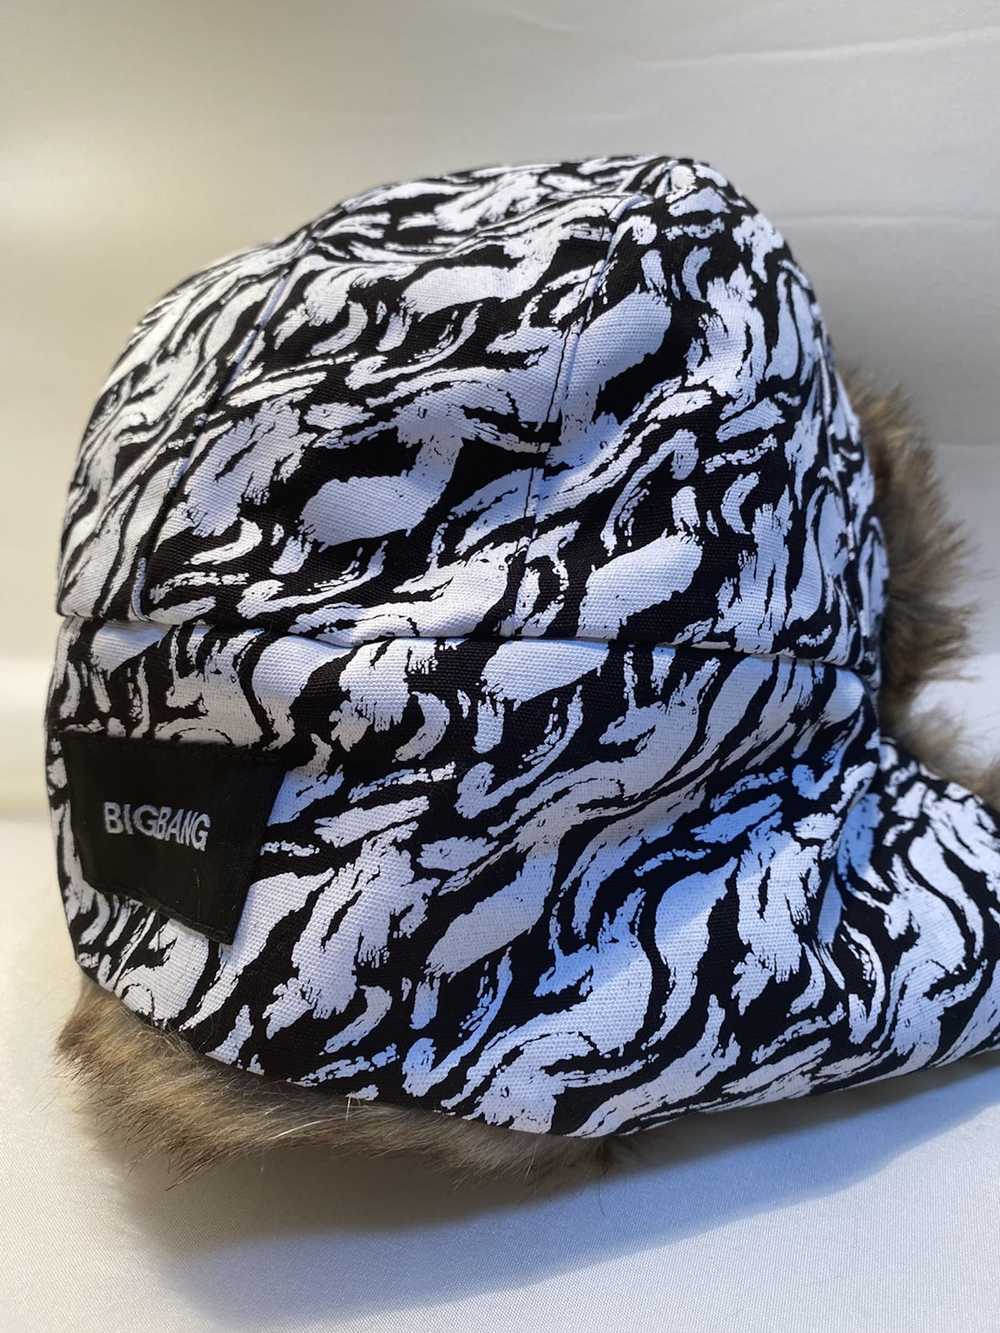 Japanese Brand Big bang winter hat - image 8